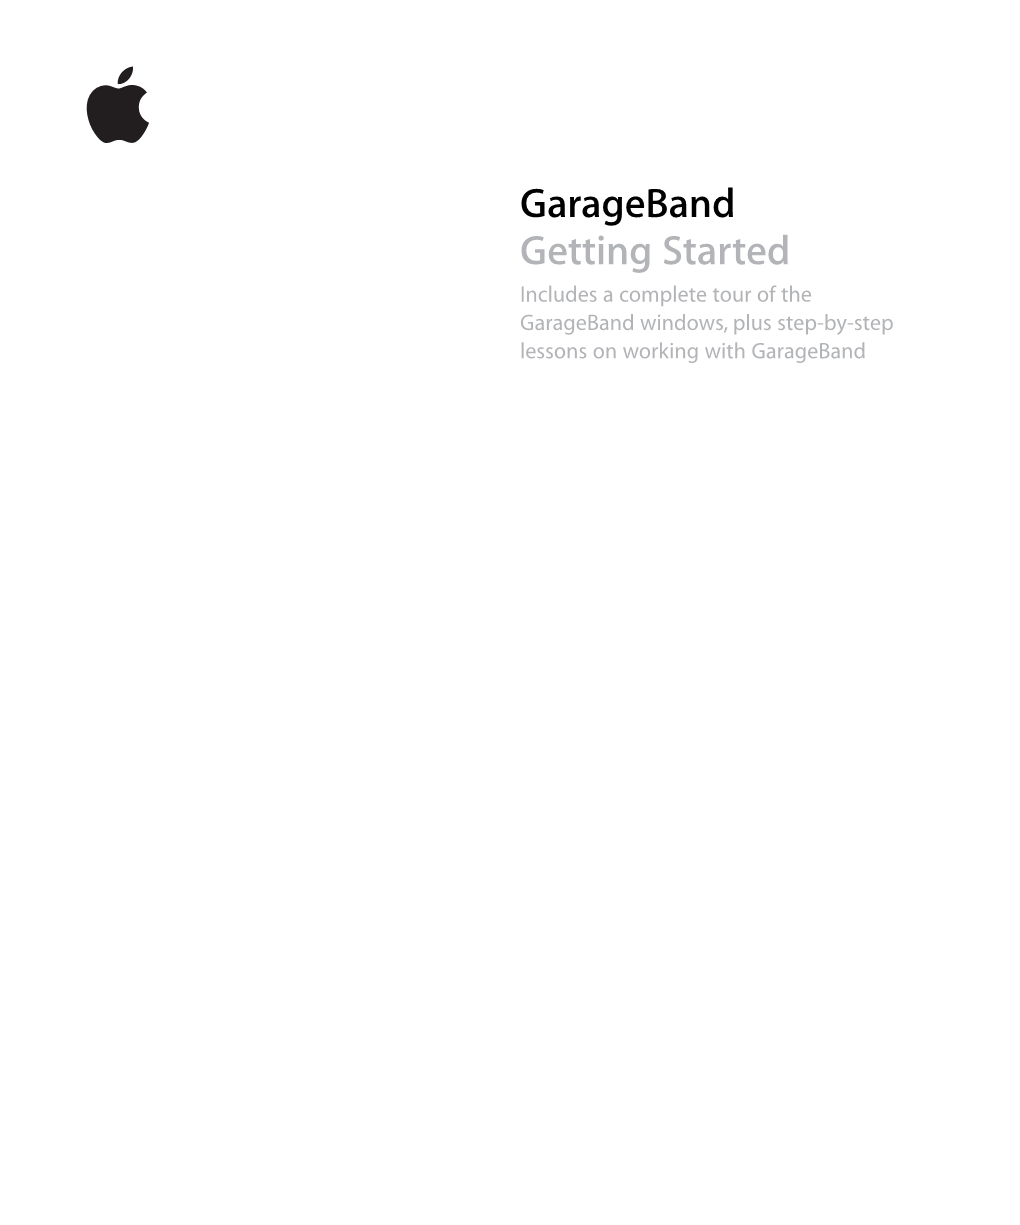 Garageband 2.0 Getting Started User's Guide (Manual)